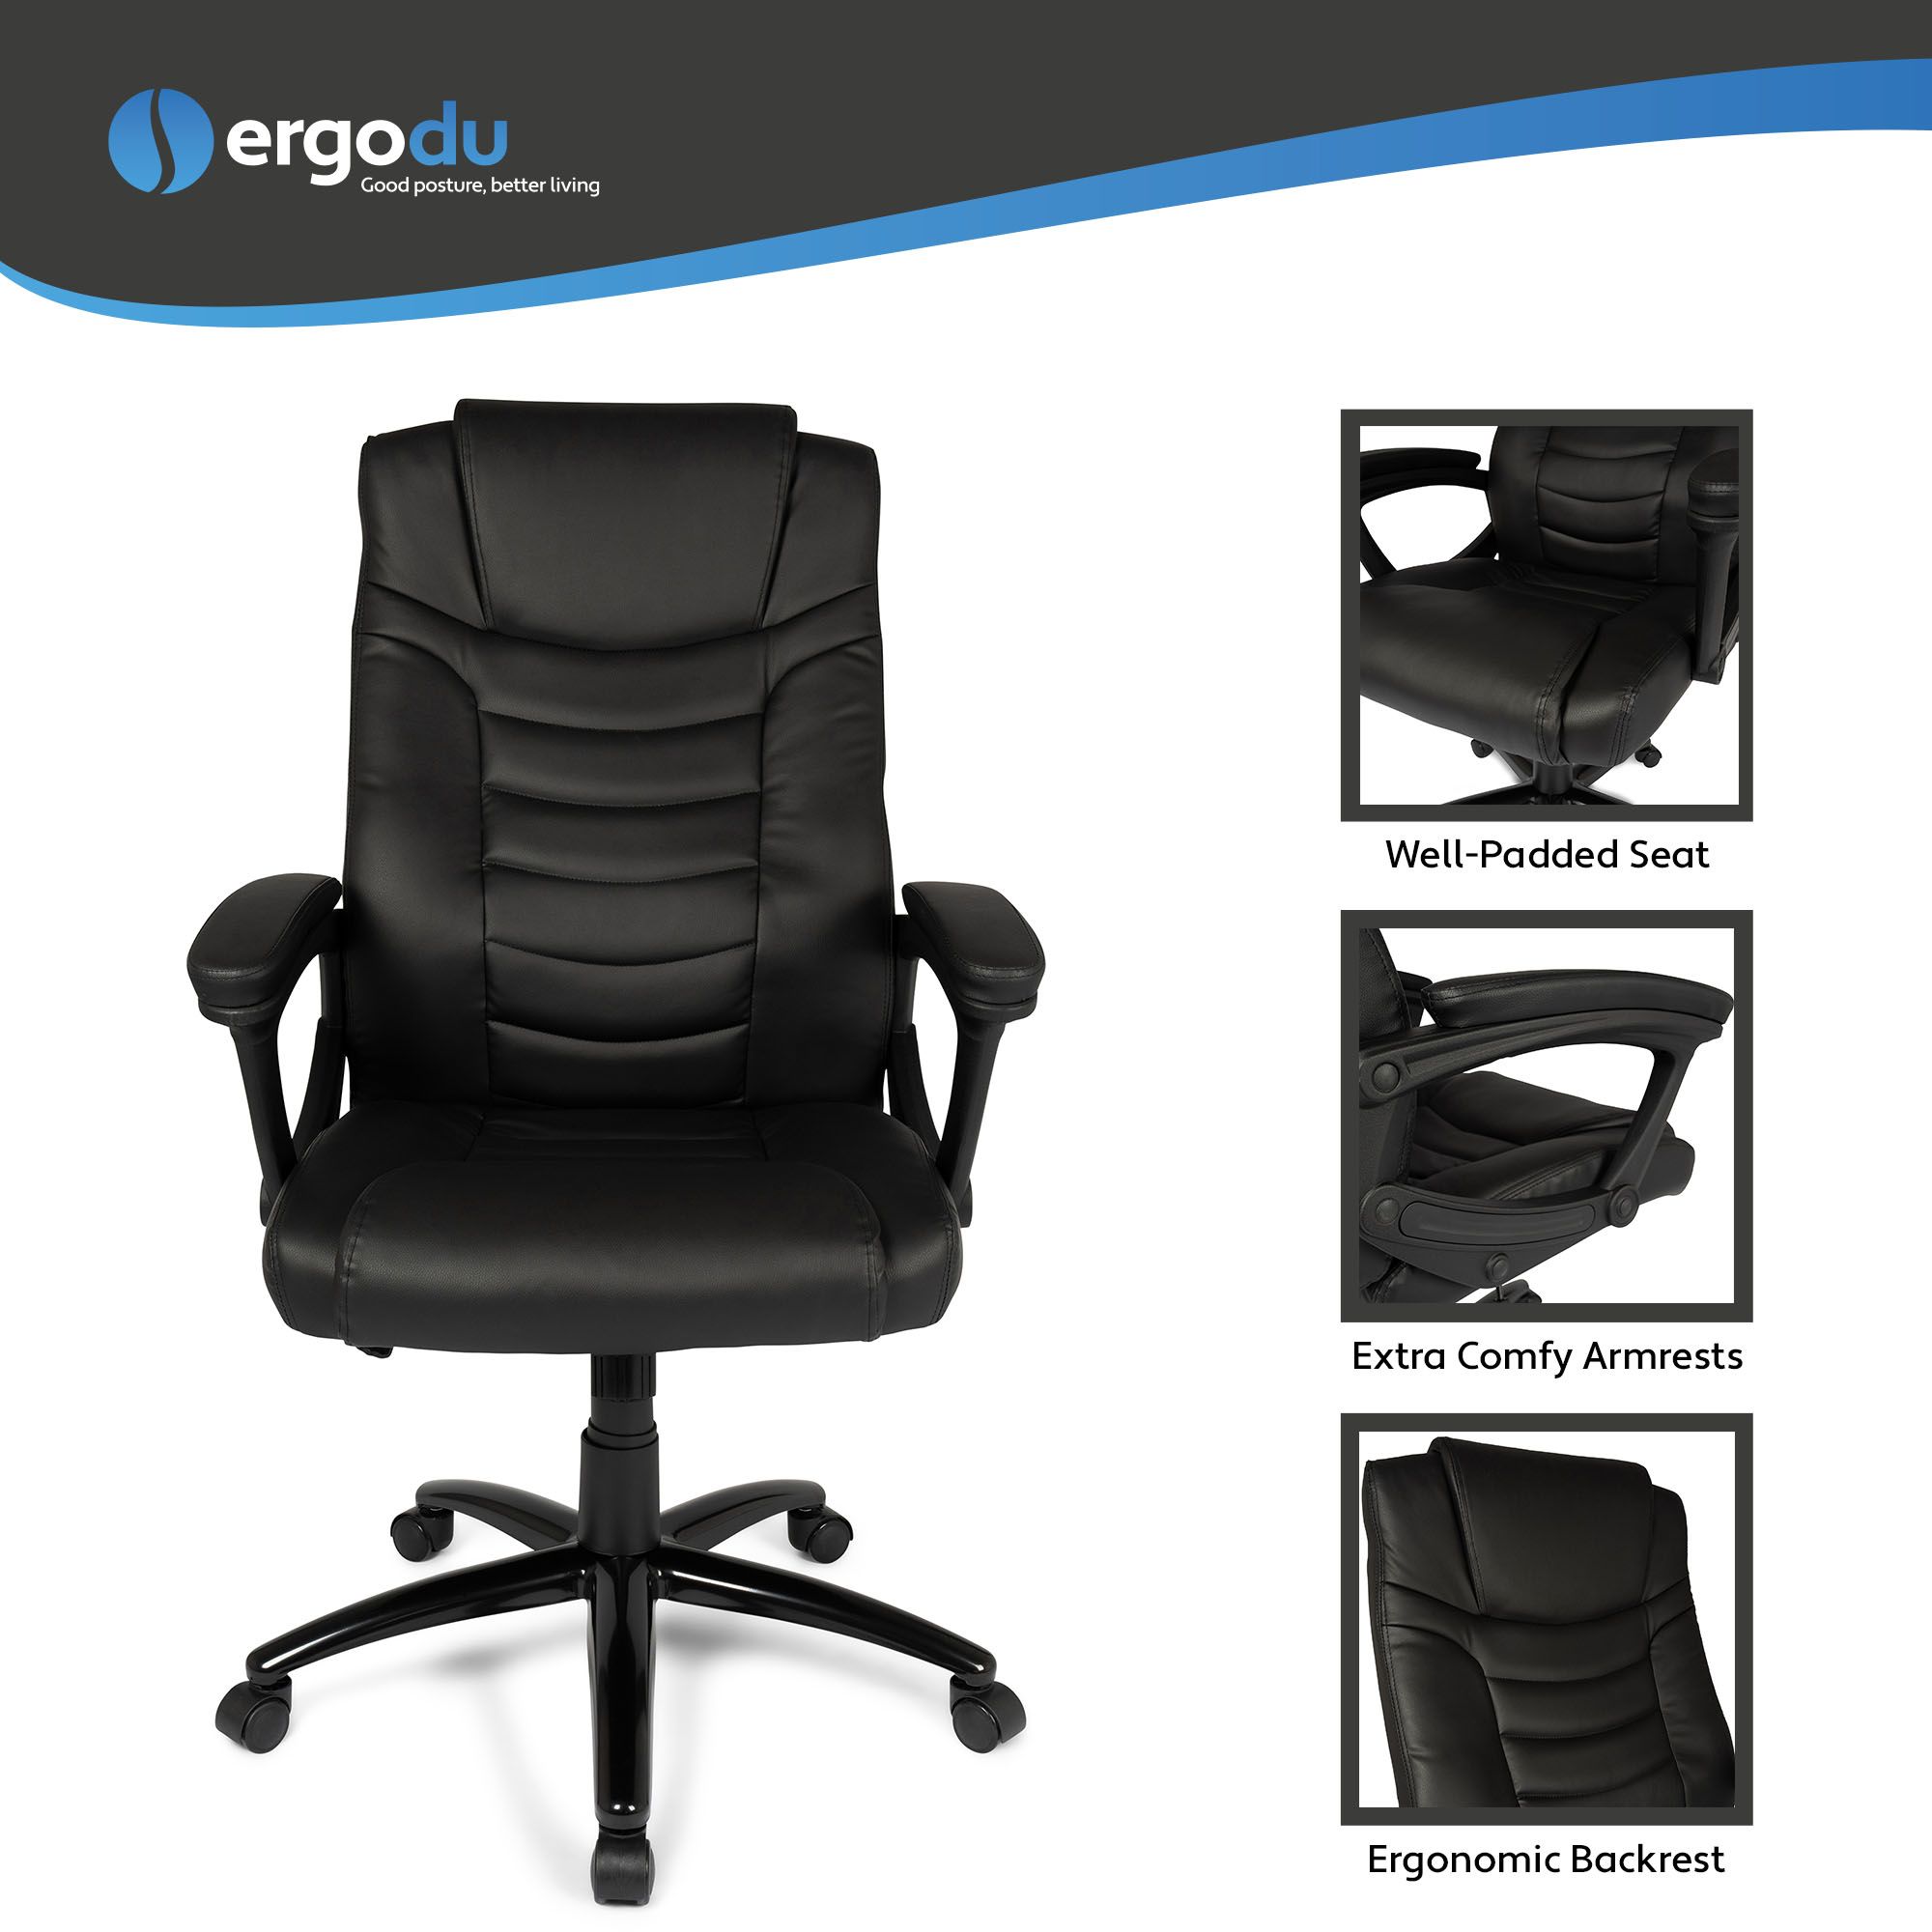 Ergodu Luxury Office Chair with High Sitting Comfort USP's